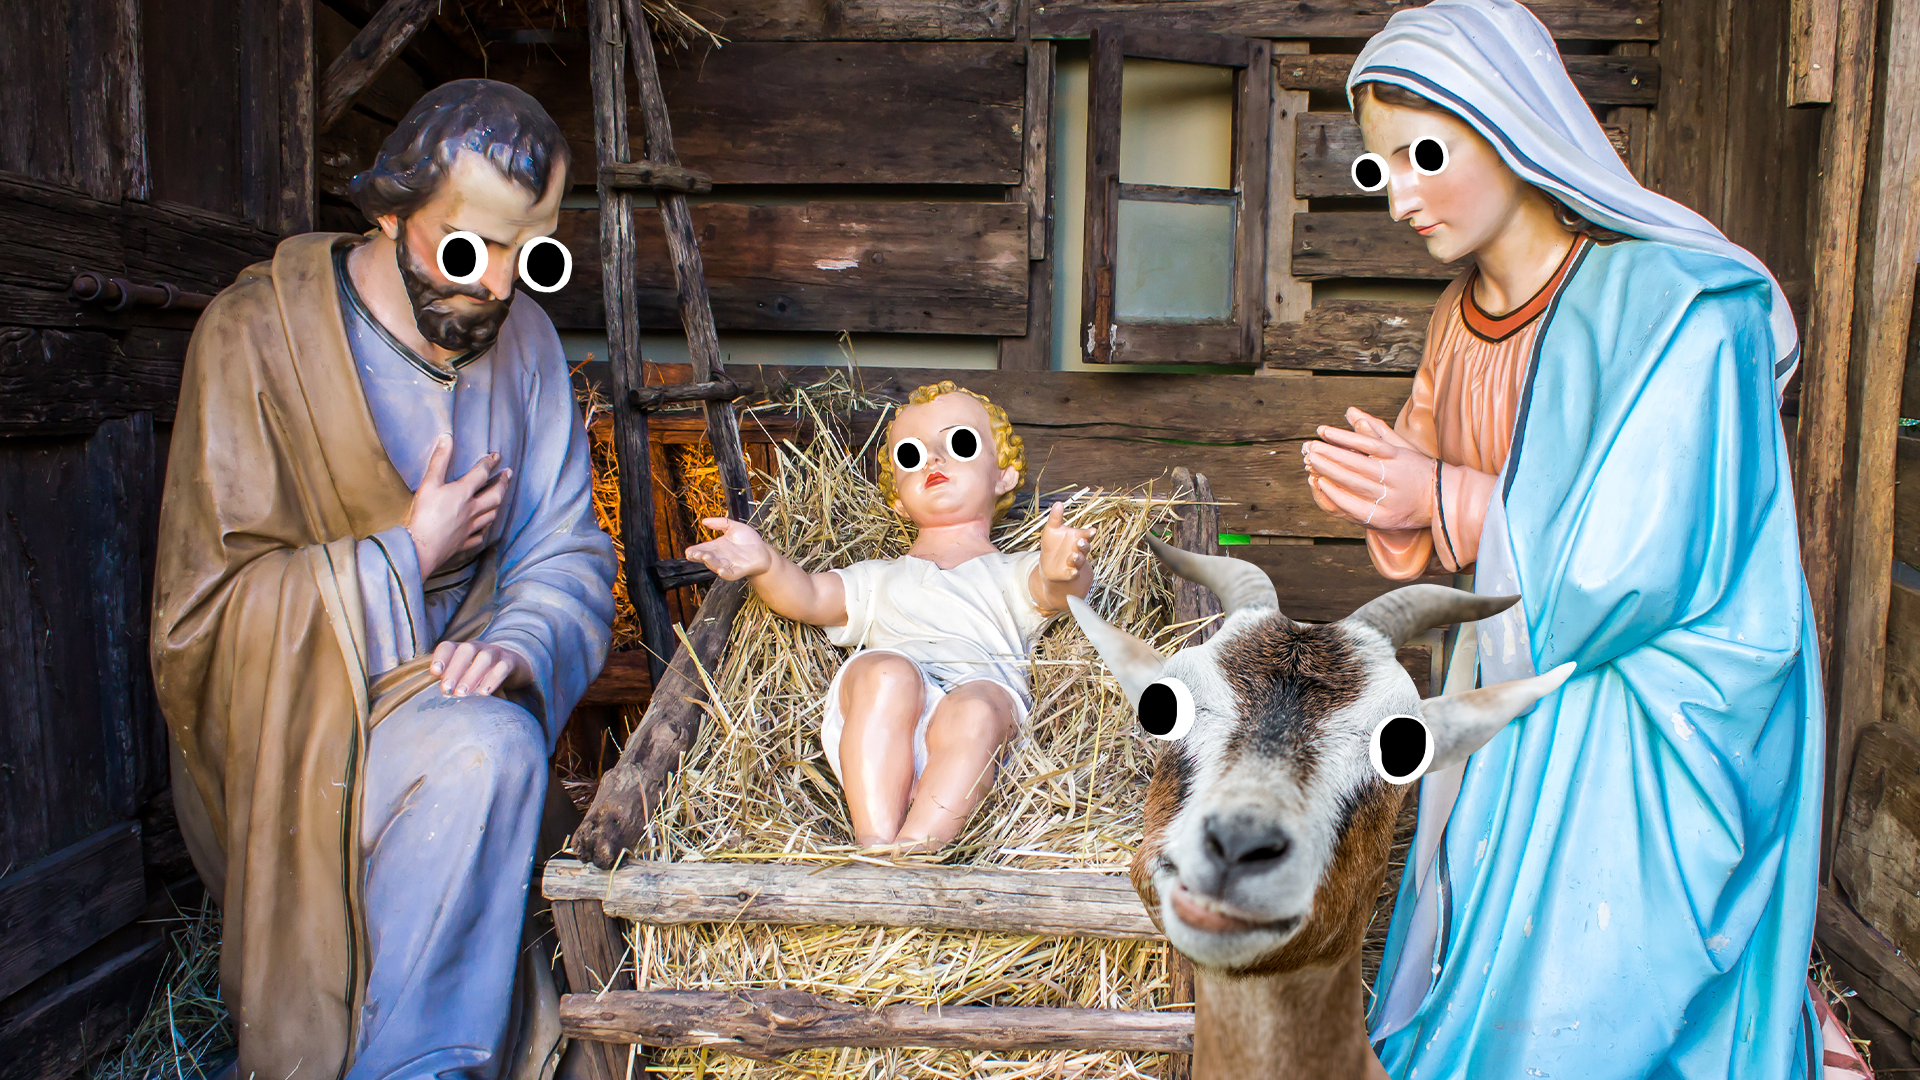 Nativity scene with derpy goat